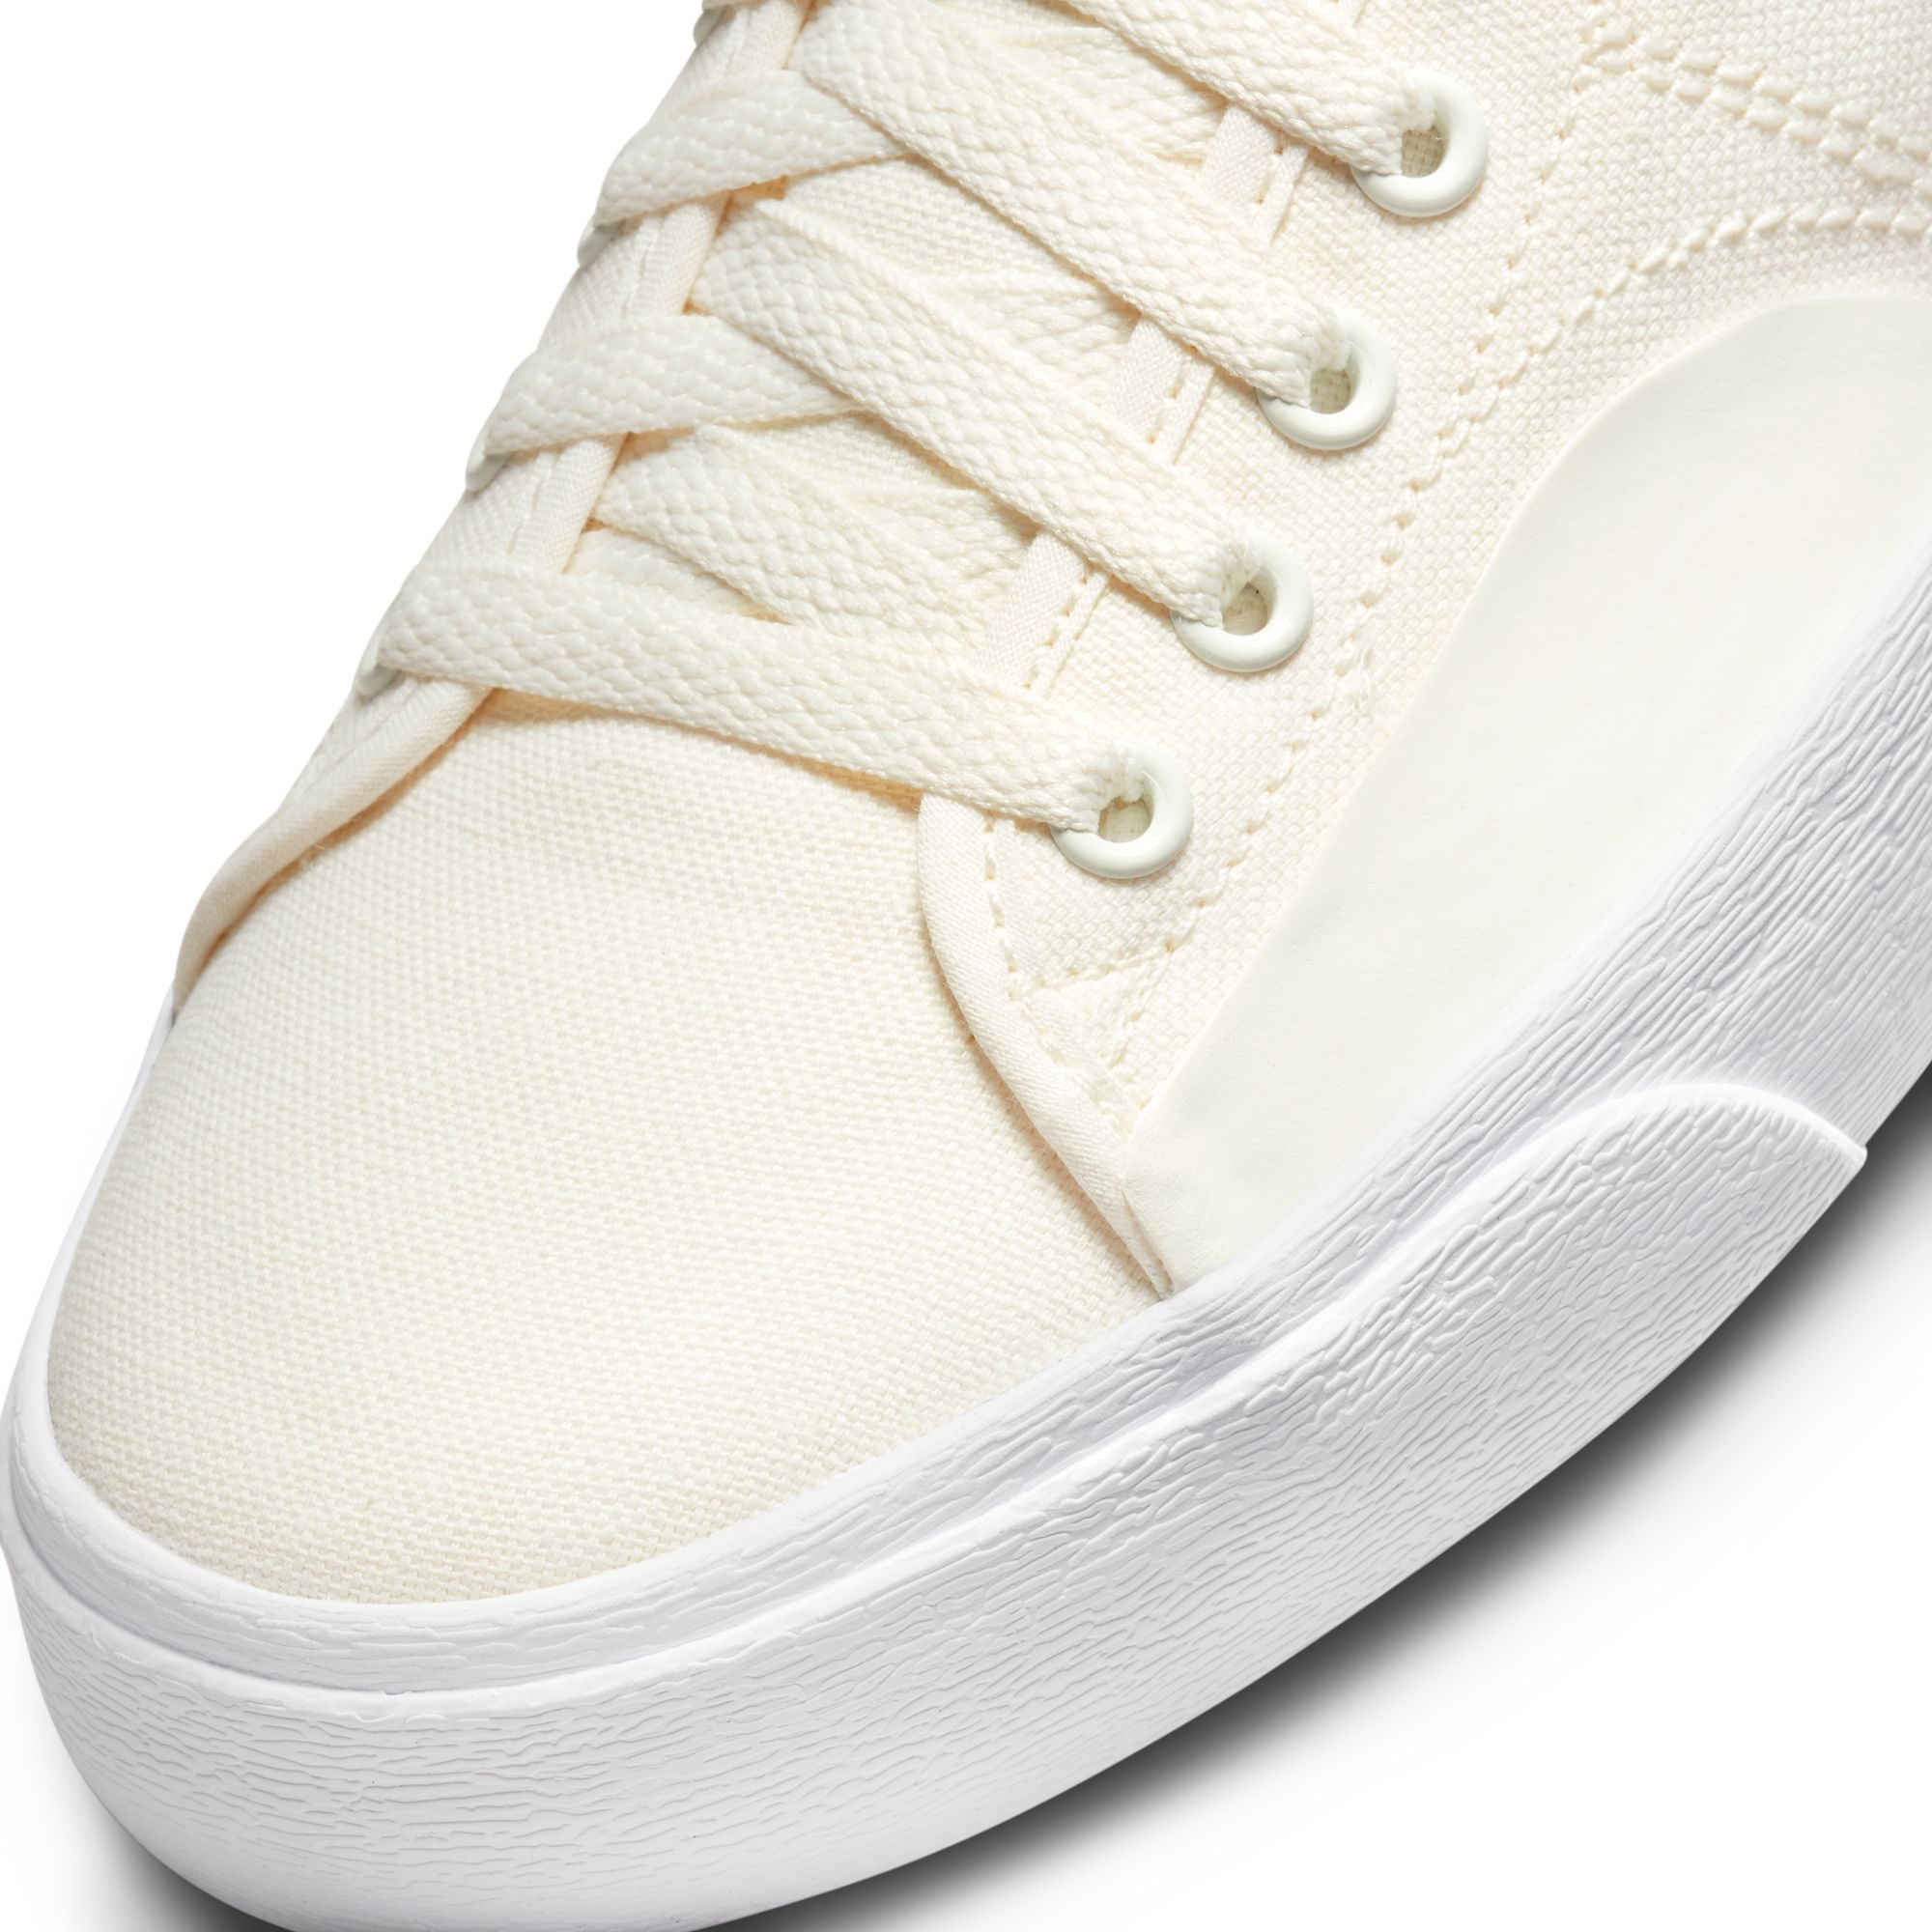 Sail/White Blazer Mid Court Nike SB Skate Shoe Detail